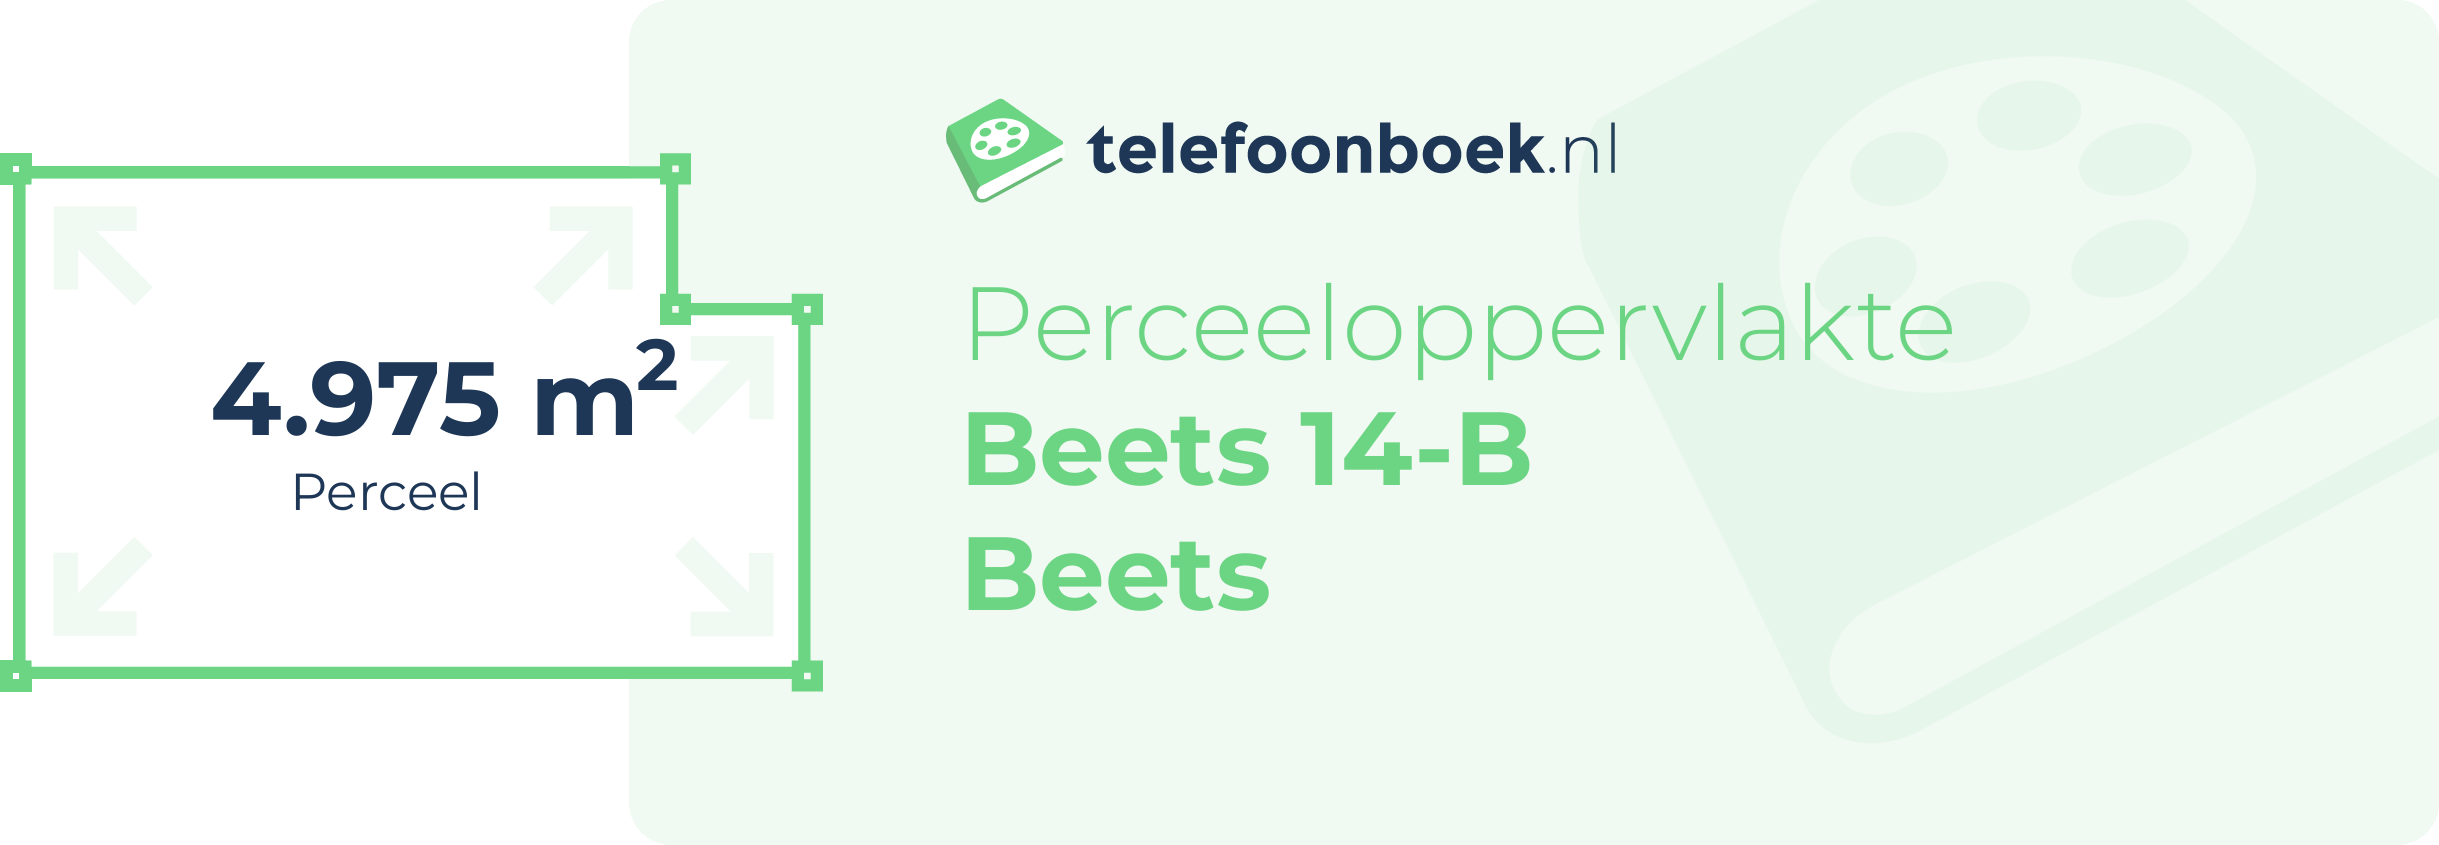 Perceeloppervlakte Beets 14-B Beets